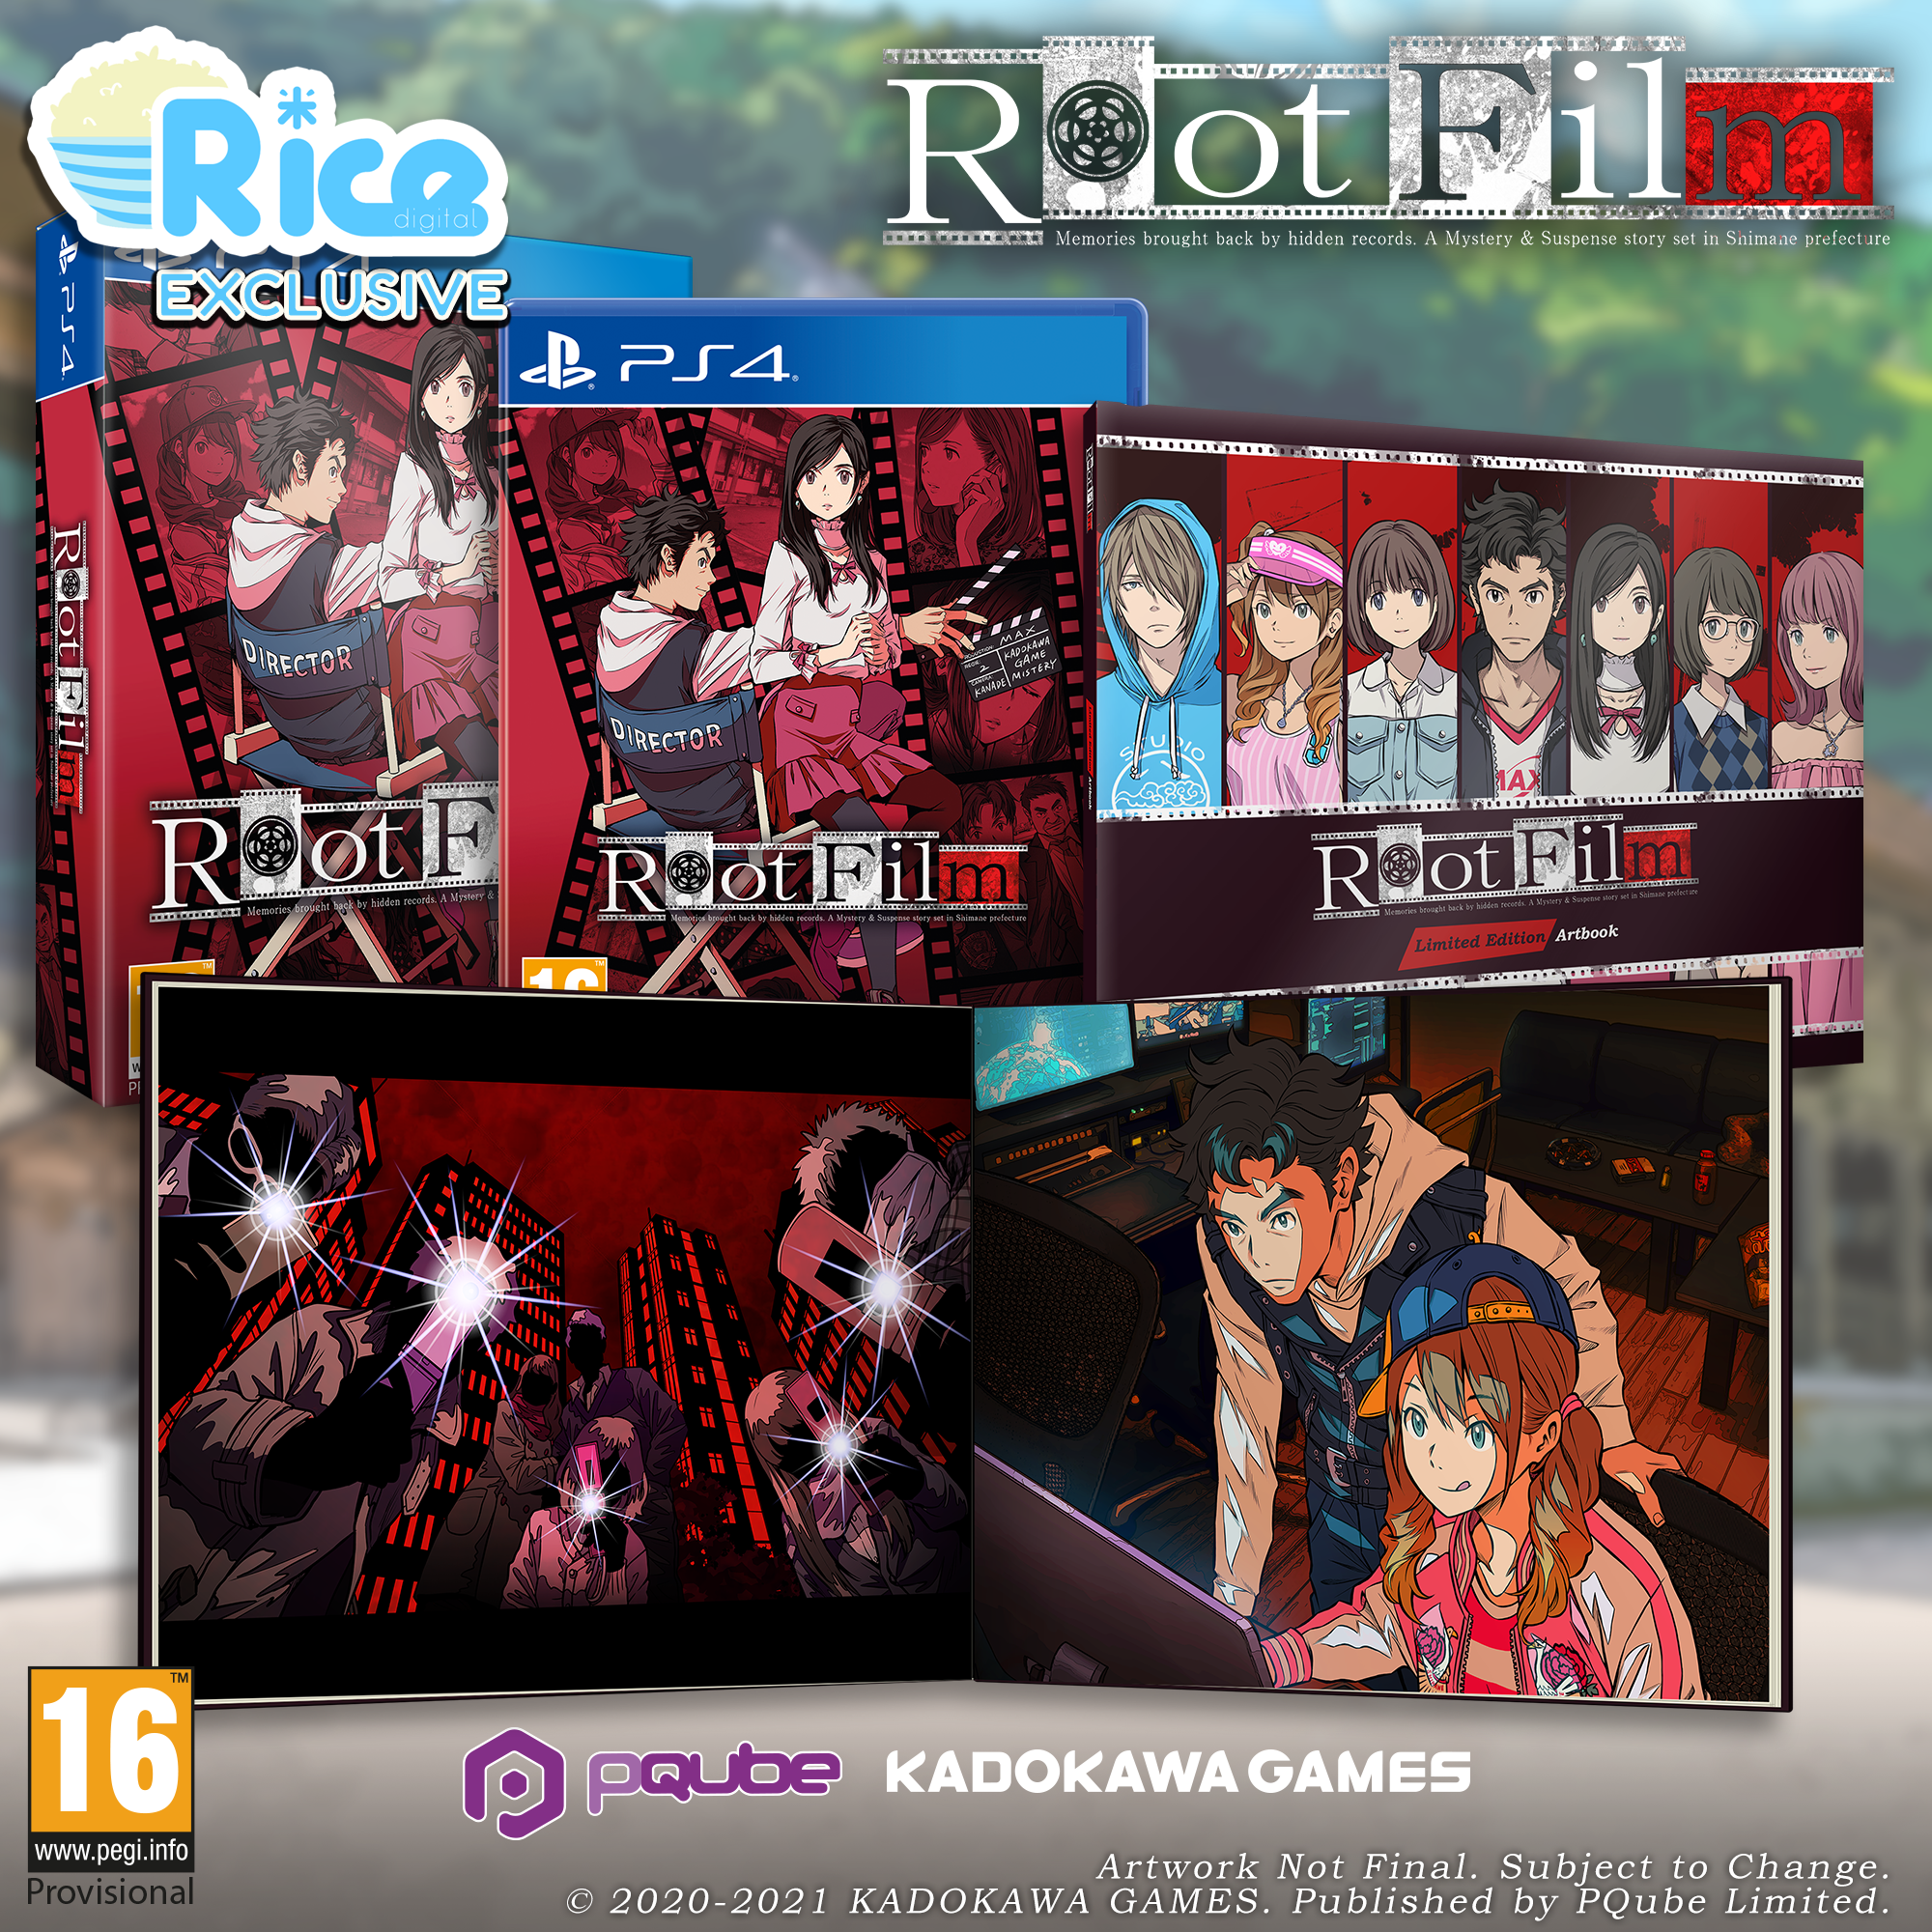 Kadokawa Games anuncia o jogo de aventura e mistério Root Film